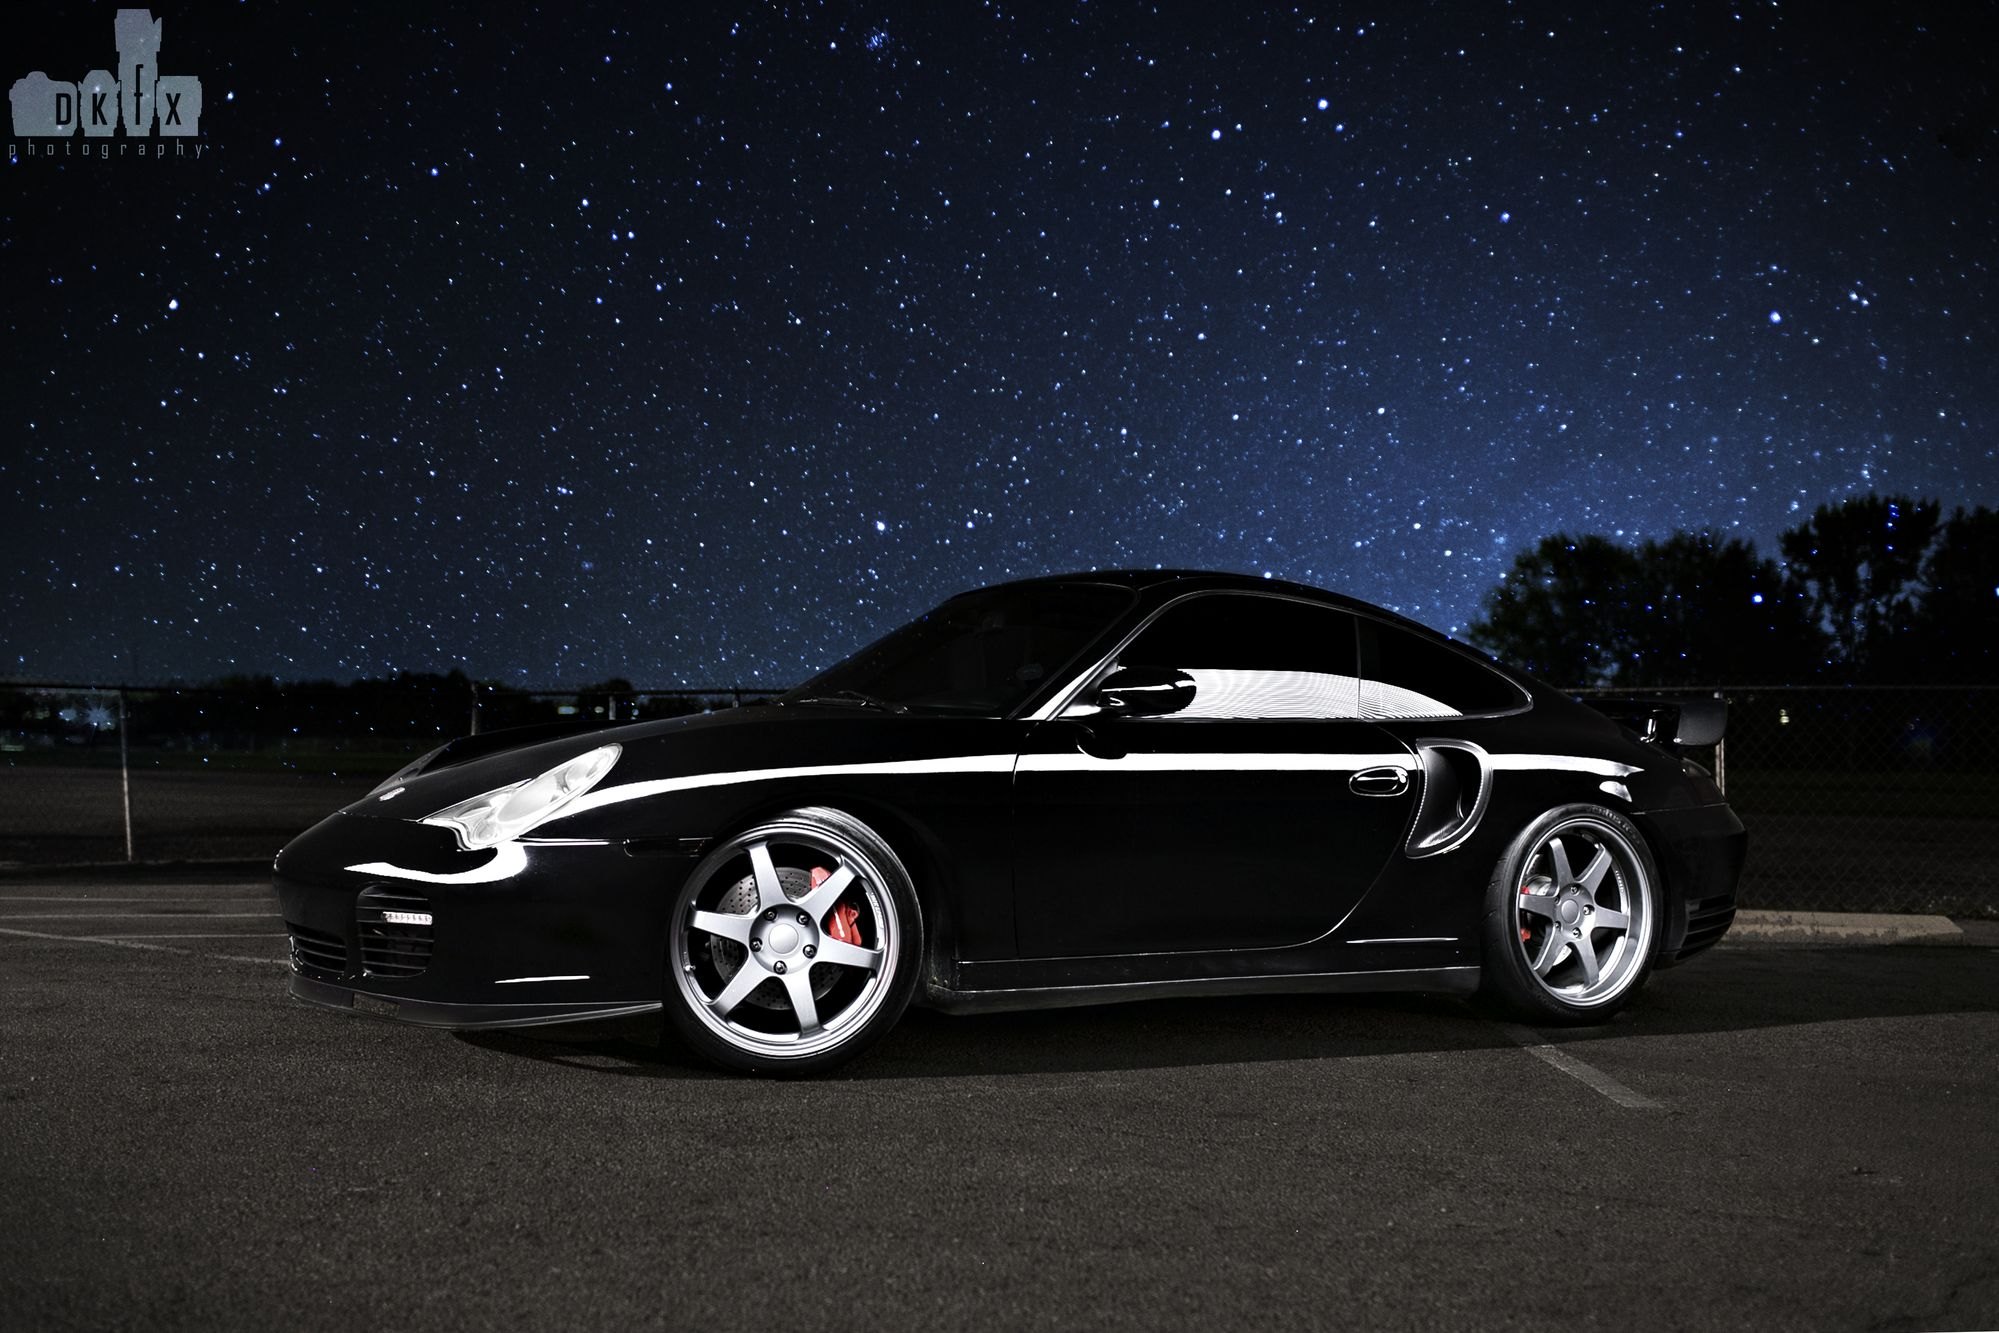 Aftermarket Front Bumper on Black Porsche 911 - Photo by dan kinzie